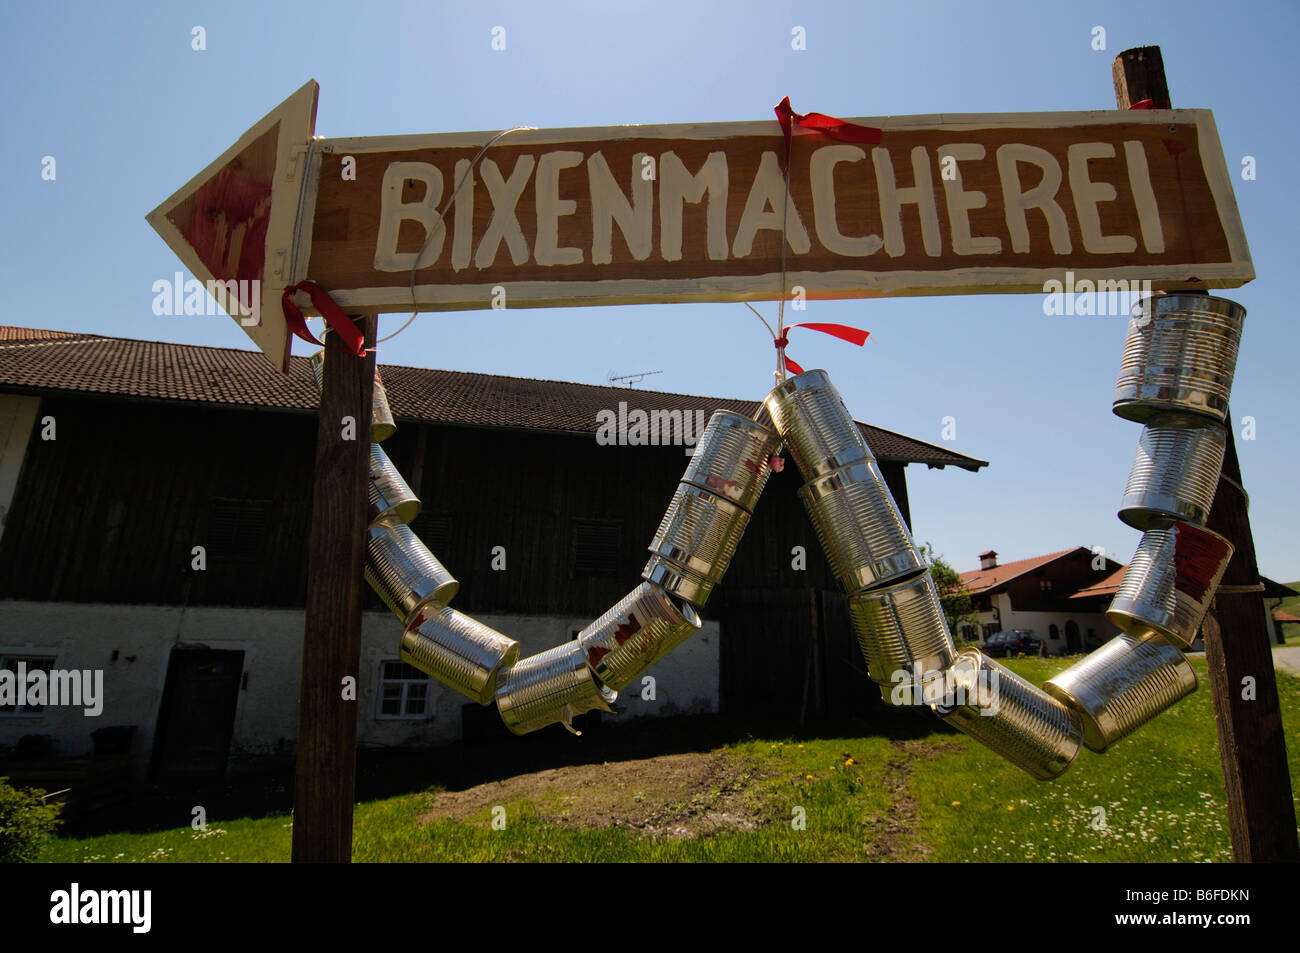 Direction signpost for the Bixenmacherei, Chiemgau, Bavaria, Germany, Europe Stock Photo